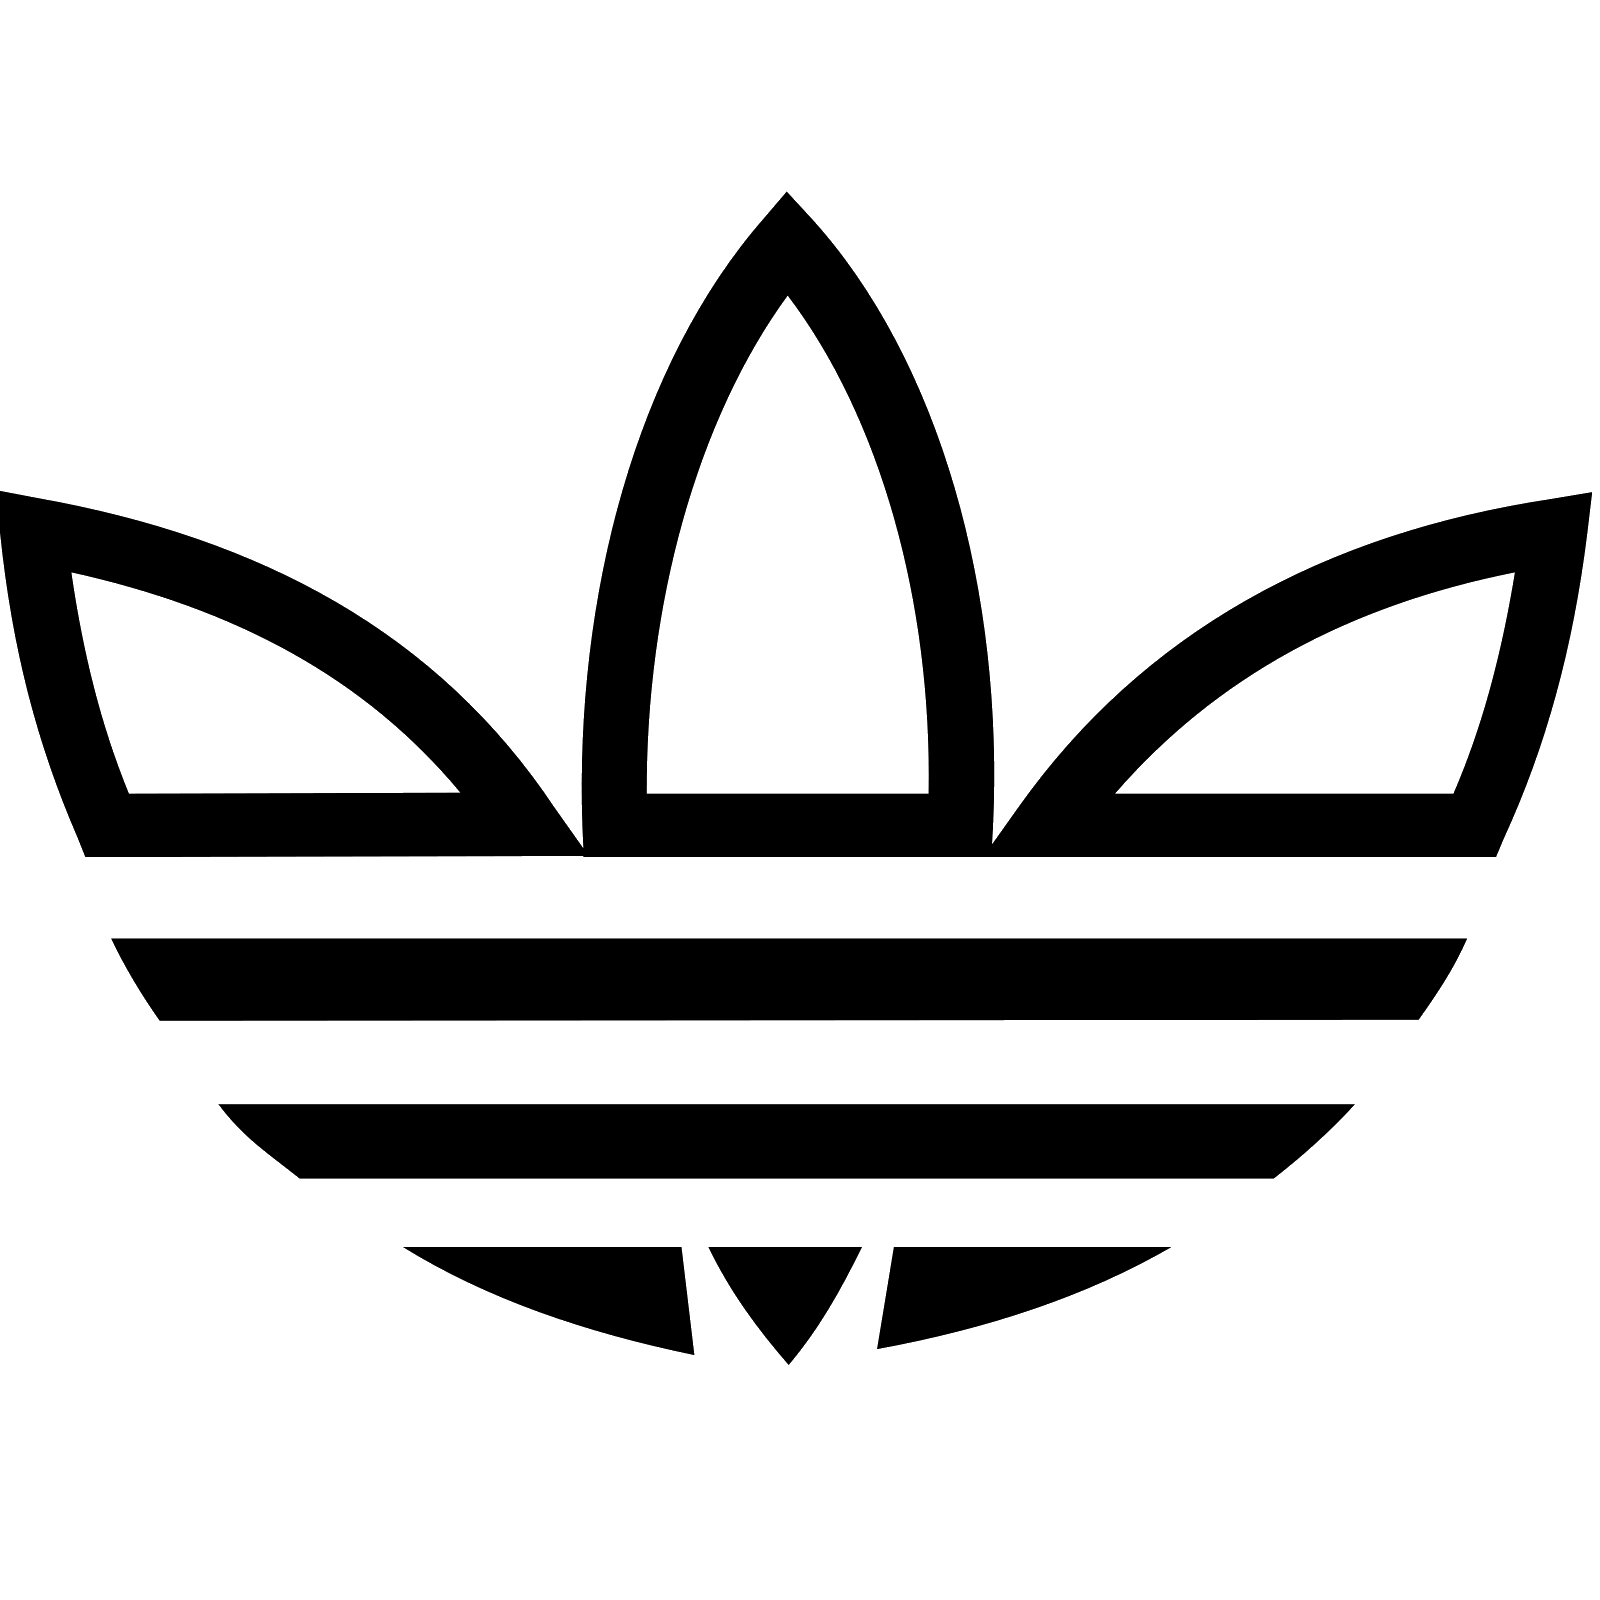 Adidas Logo PNG in Transparent